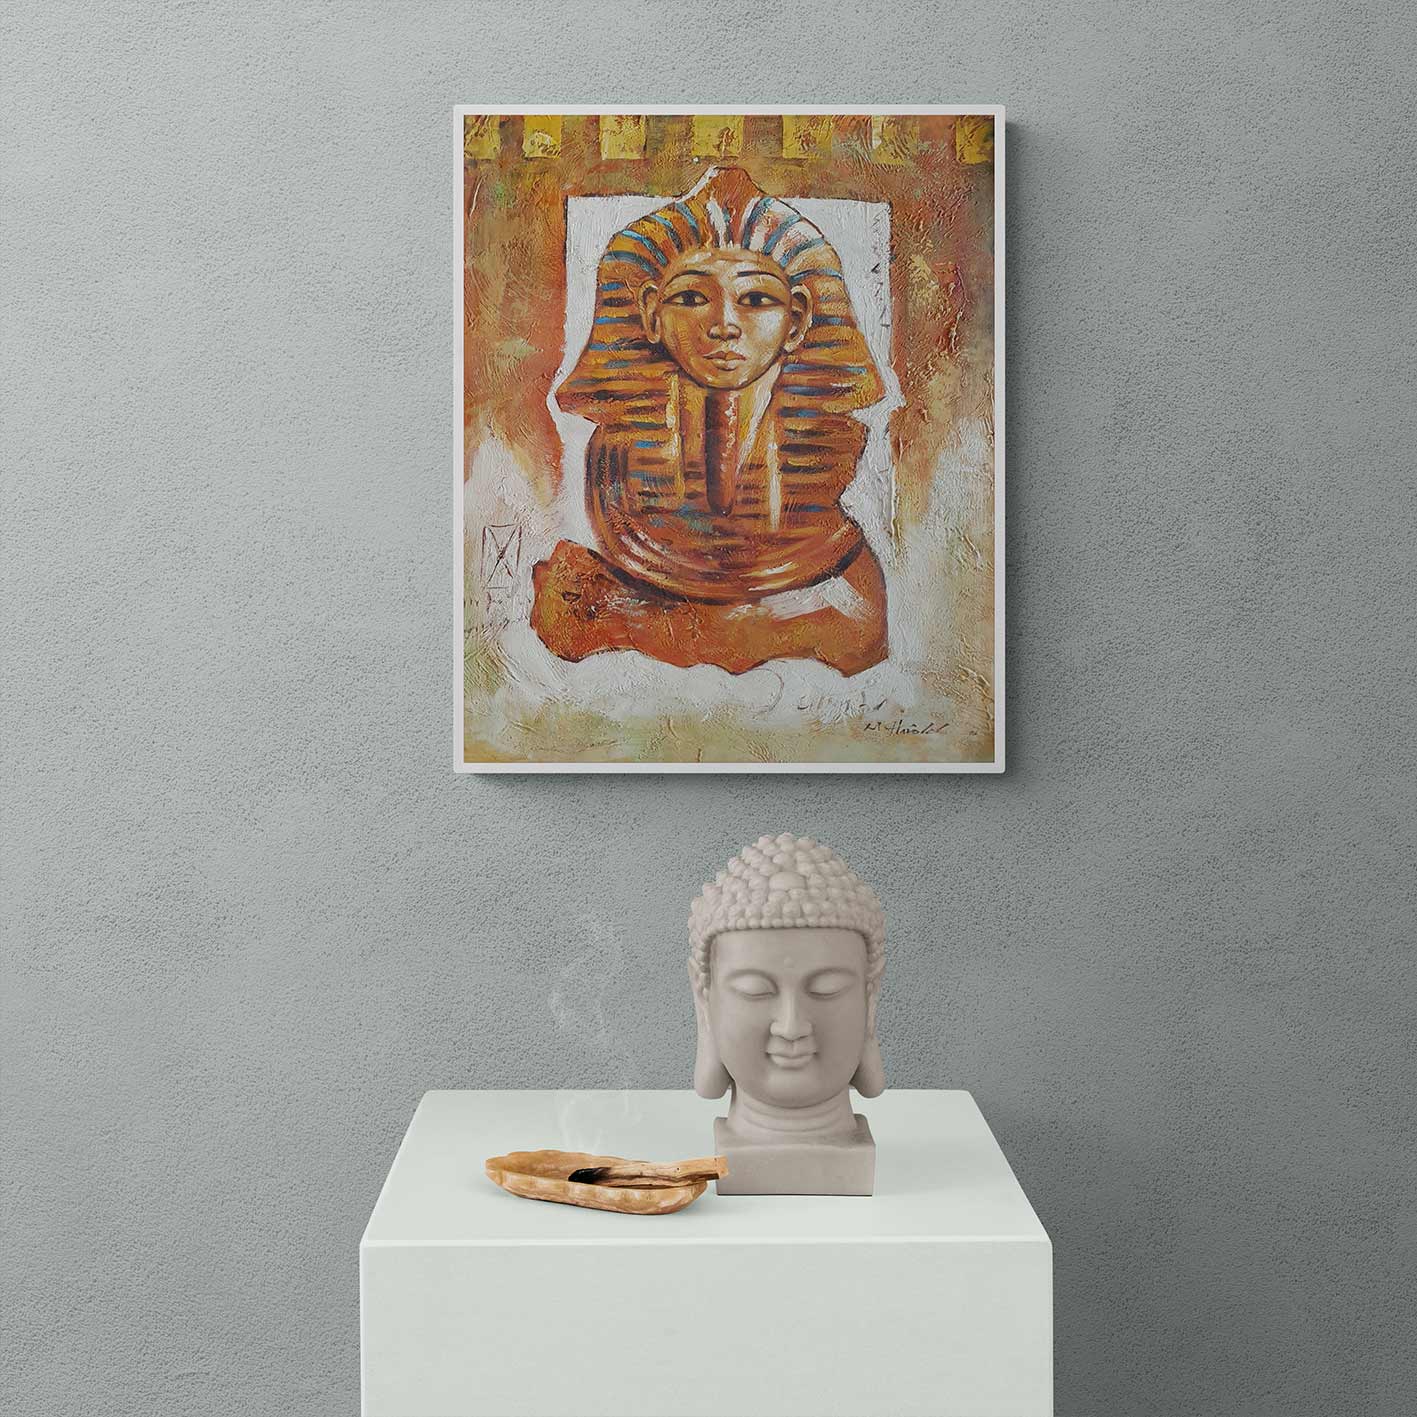 Giza Sphinx painting 50x60 cm